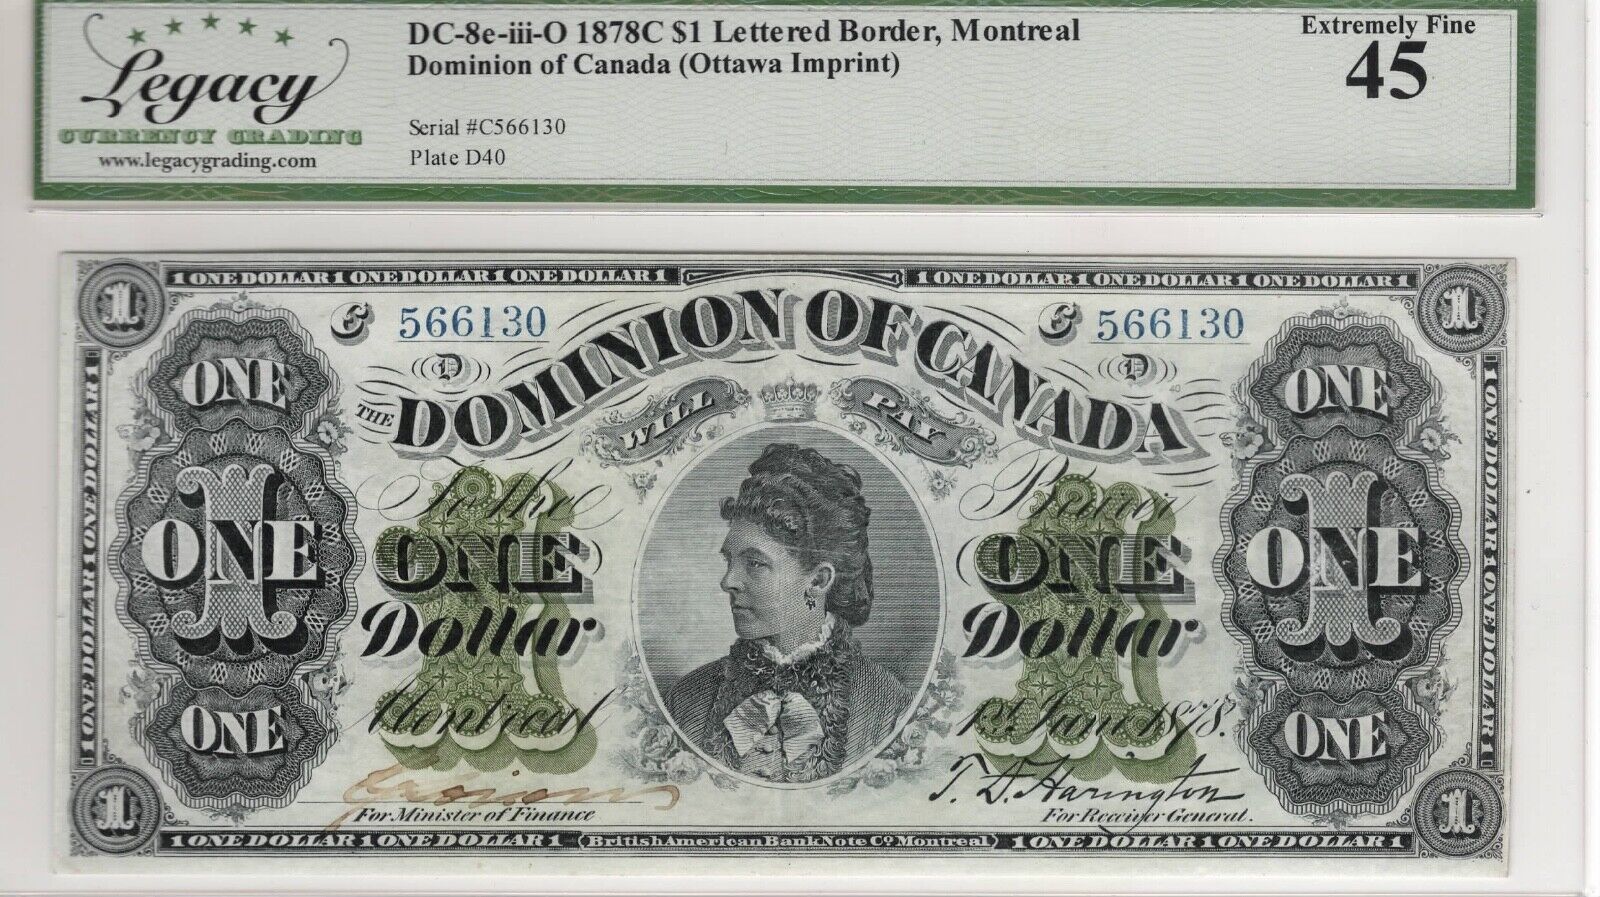 Dominion Of Canada Montreal $1 1878 Dc-8eiii-o Legacy Ef-45 (ottawa) Banknote